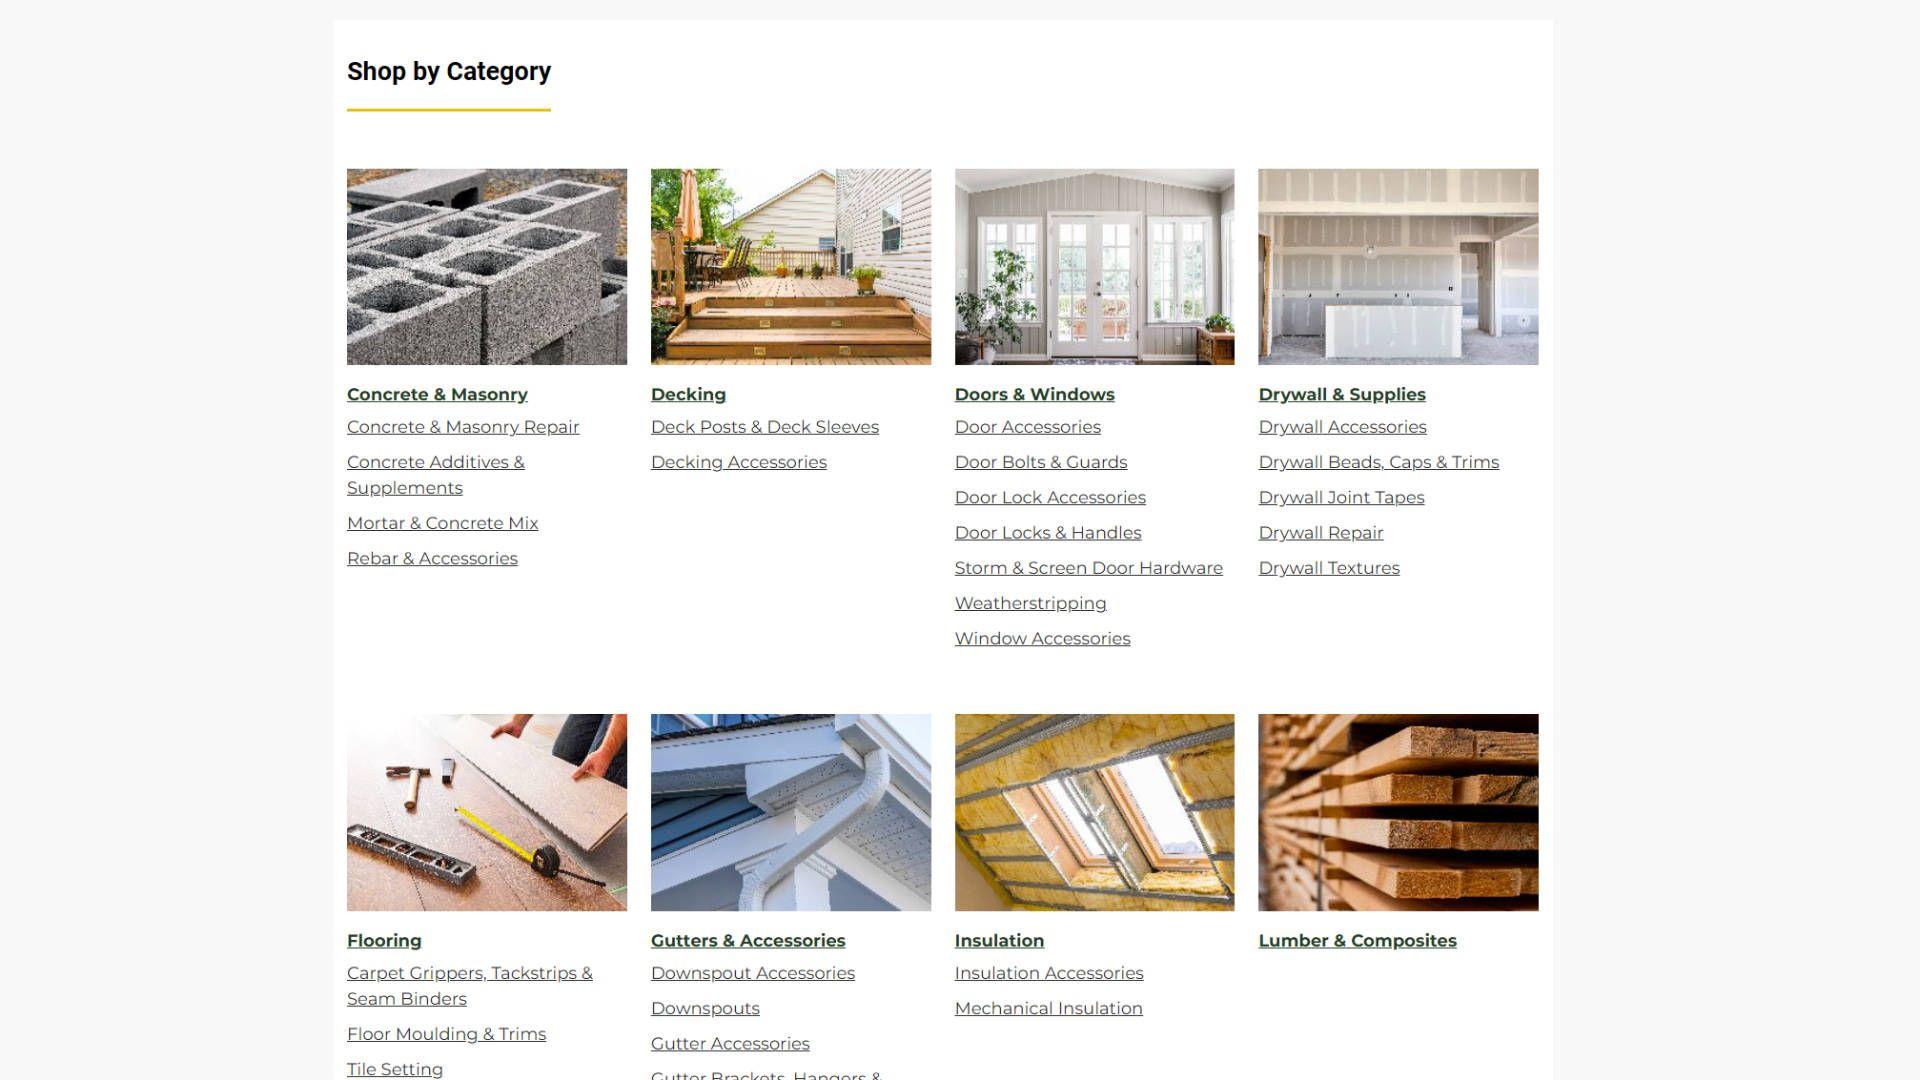 Anawalt Lumber building materials page 2